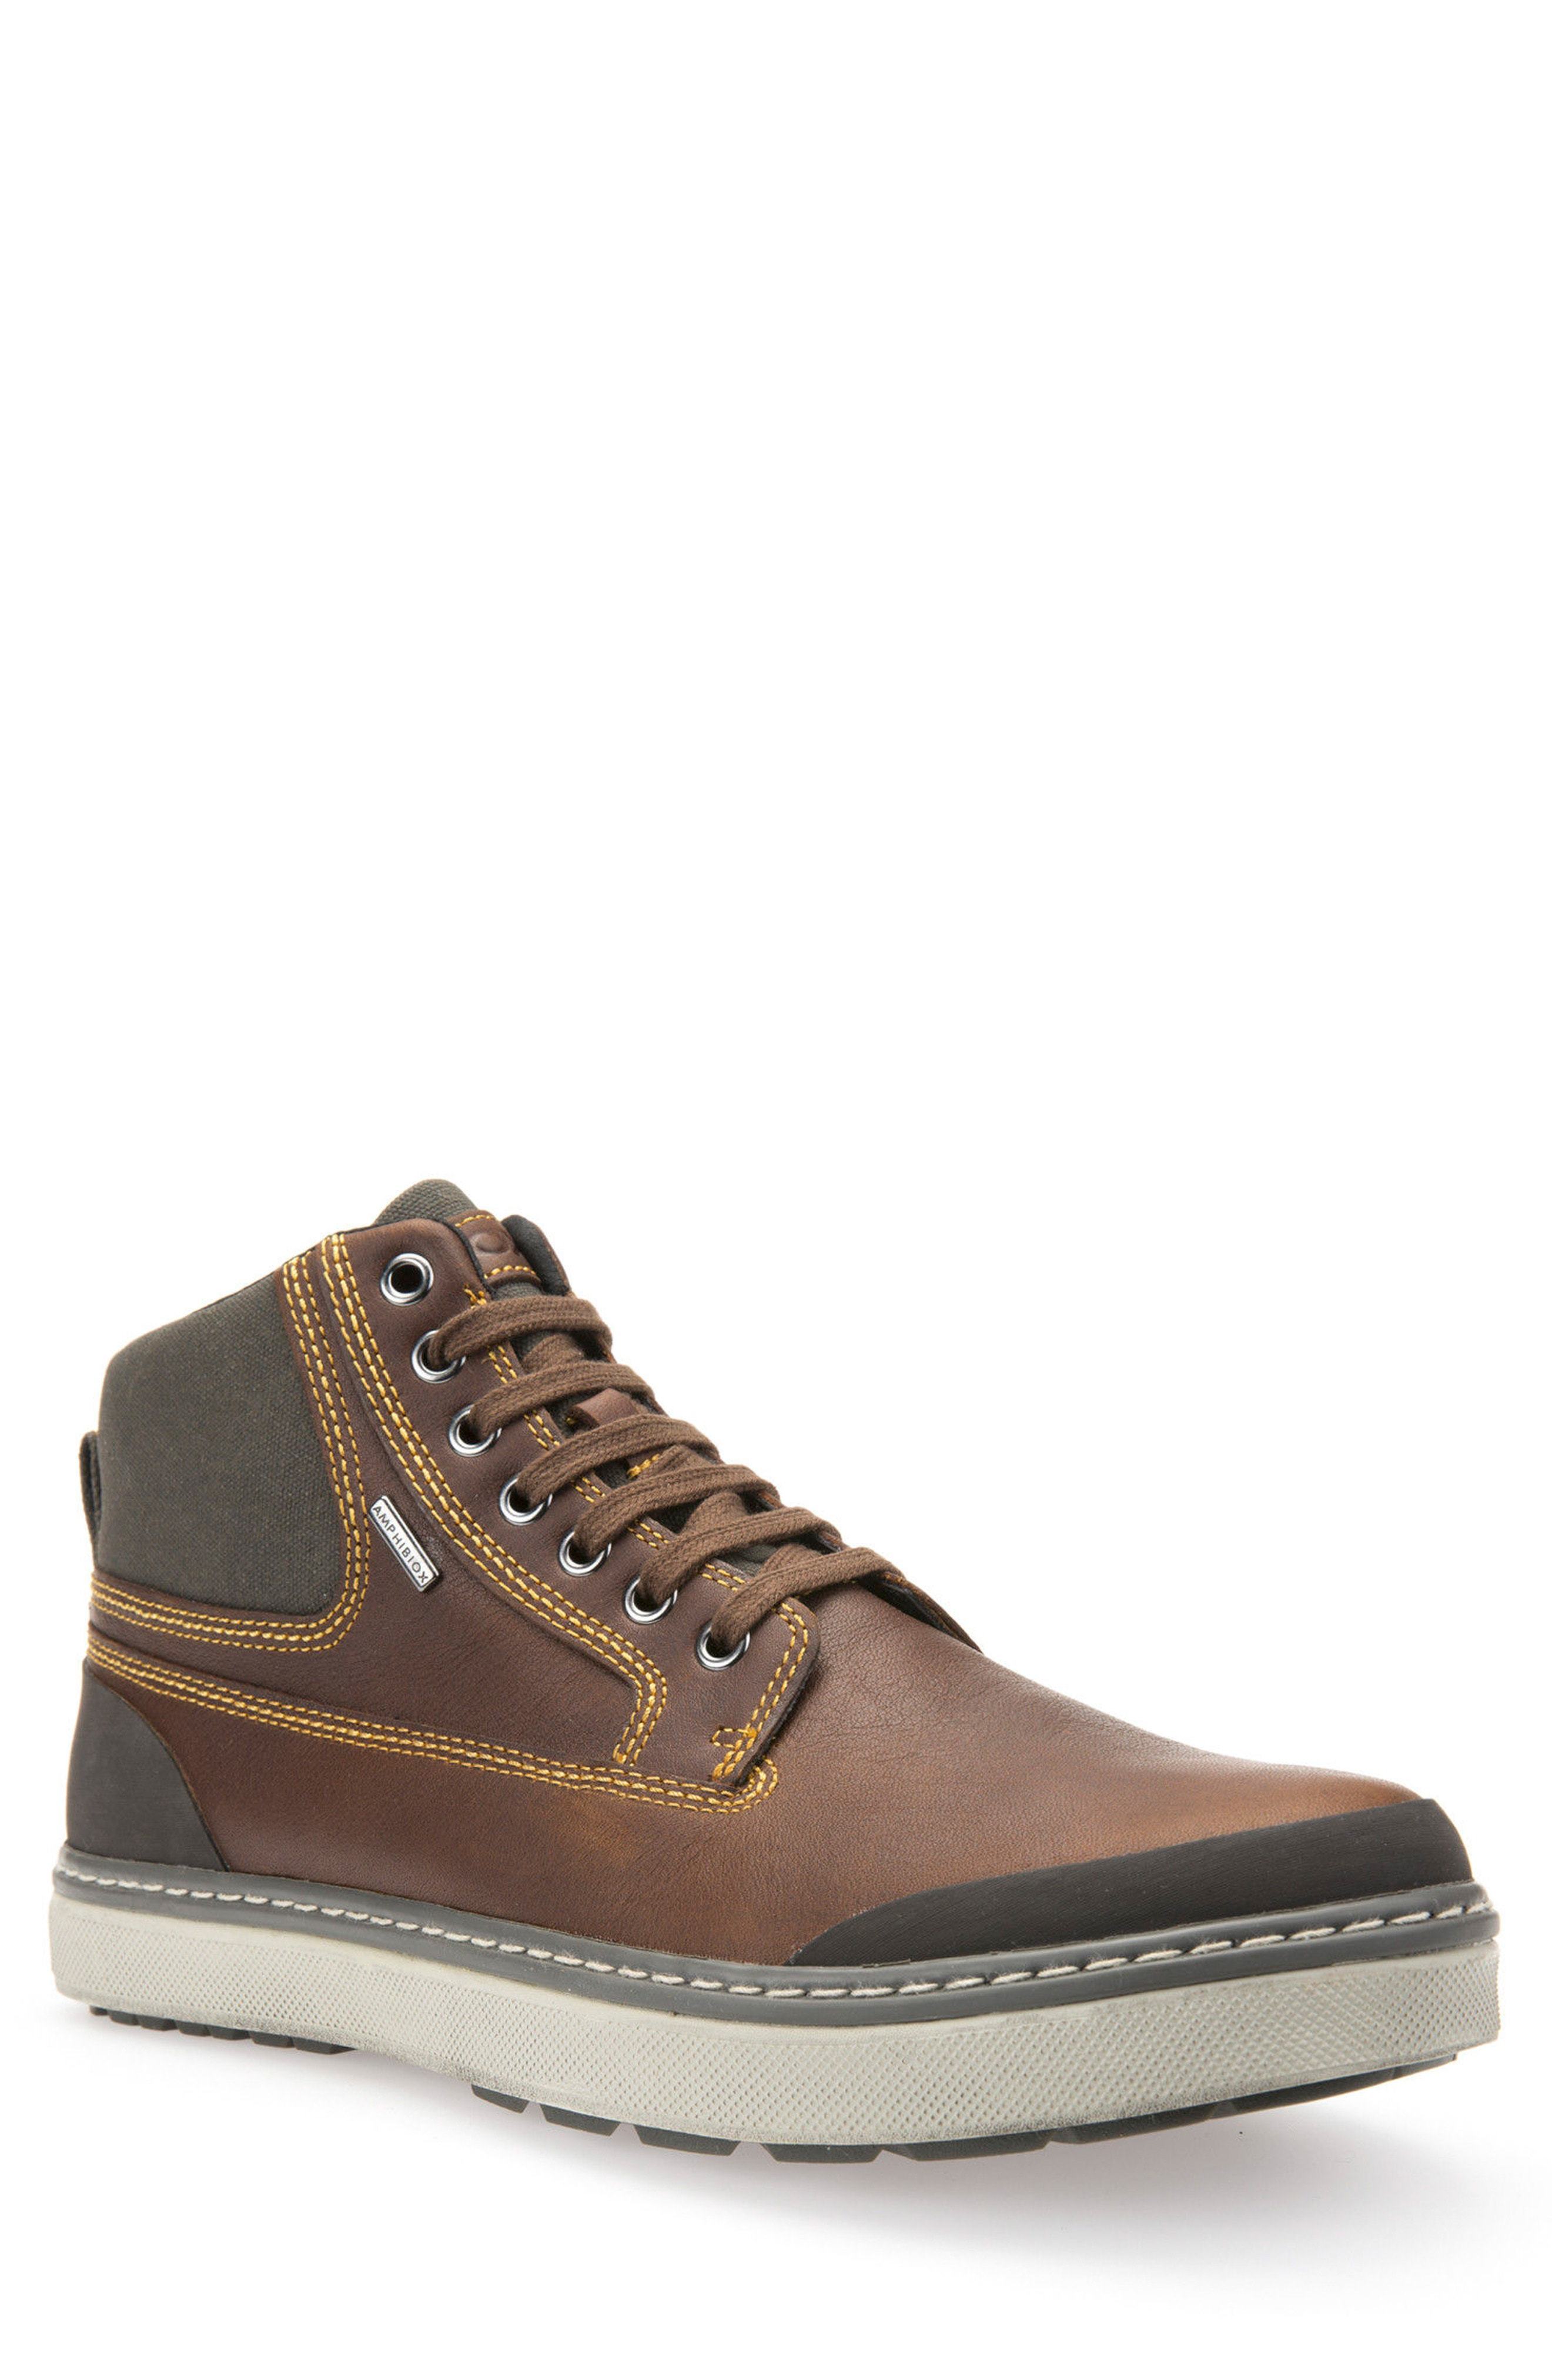 muy agradable amargo claridad Geox Mattias Amphibiox Waterproof Leather Sneaker, $220 | Nordstrom |  Lookastic